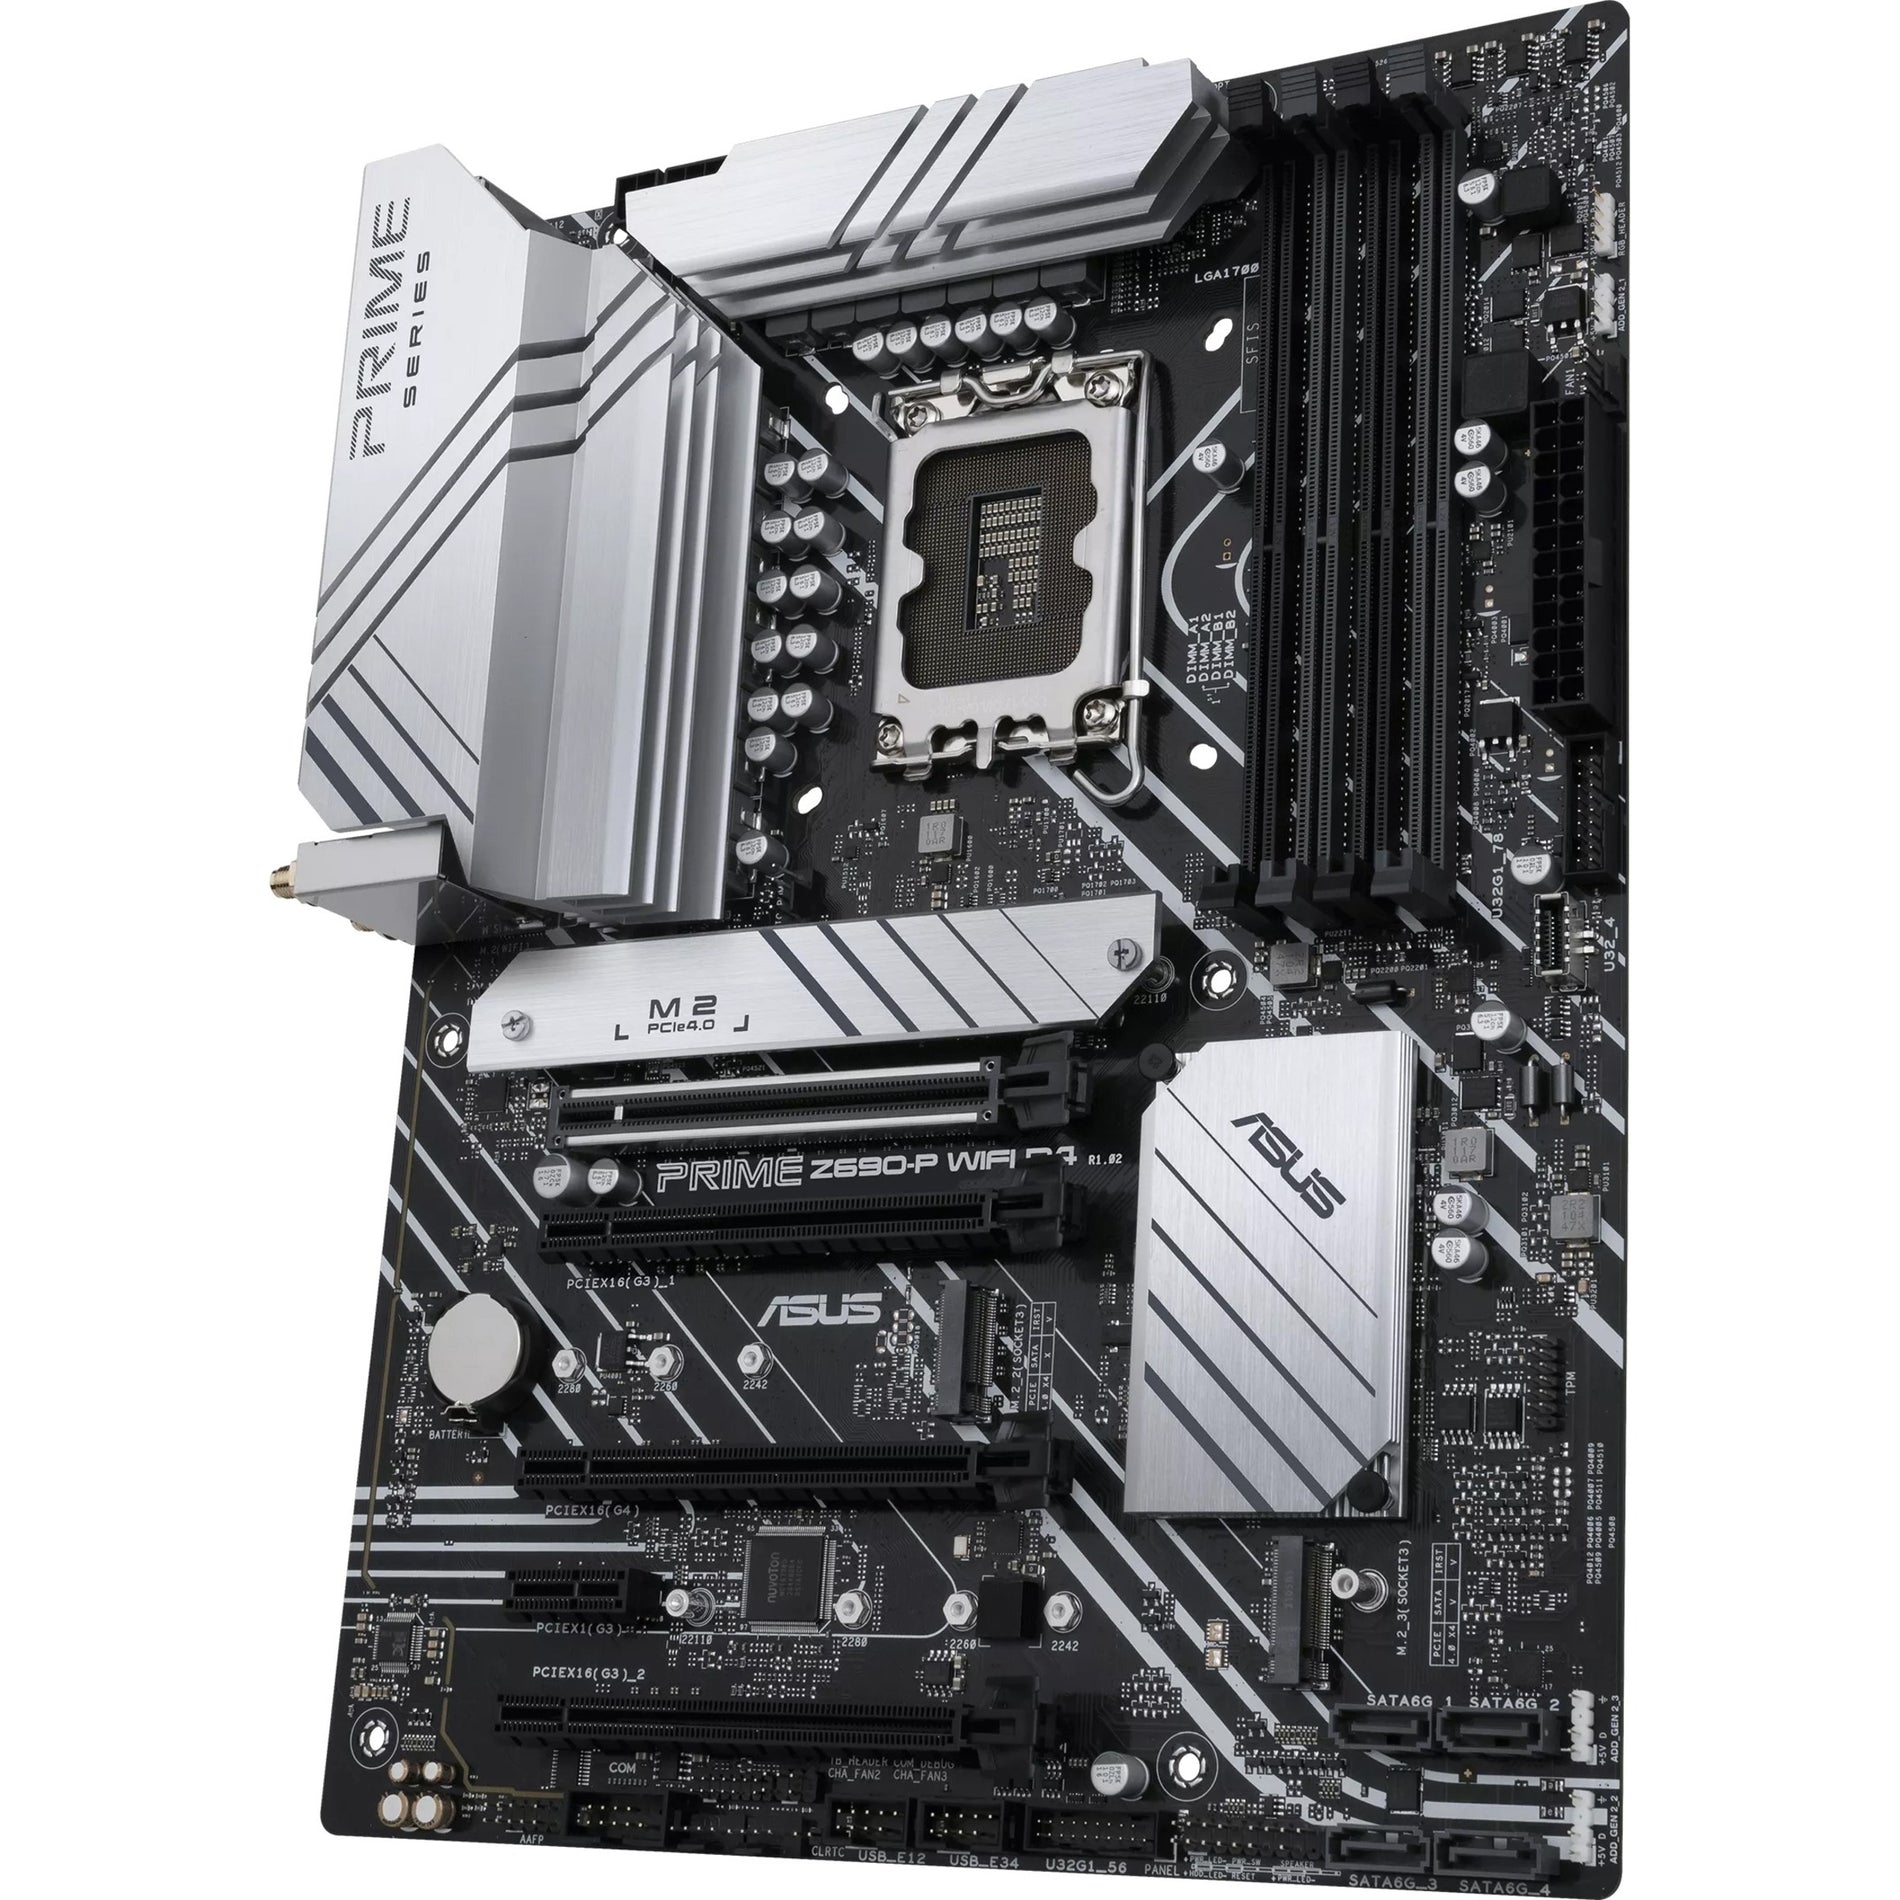 ASUS Desktop Motherboard PRIME Z690-P WIFI D4, Built for Productivity, 12th Gen Intel Core Processor Support